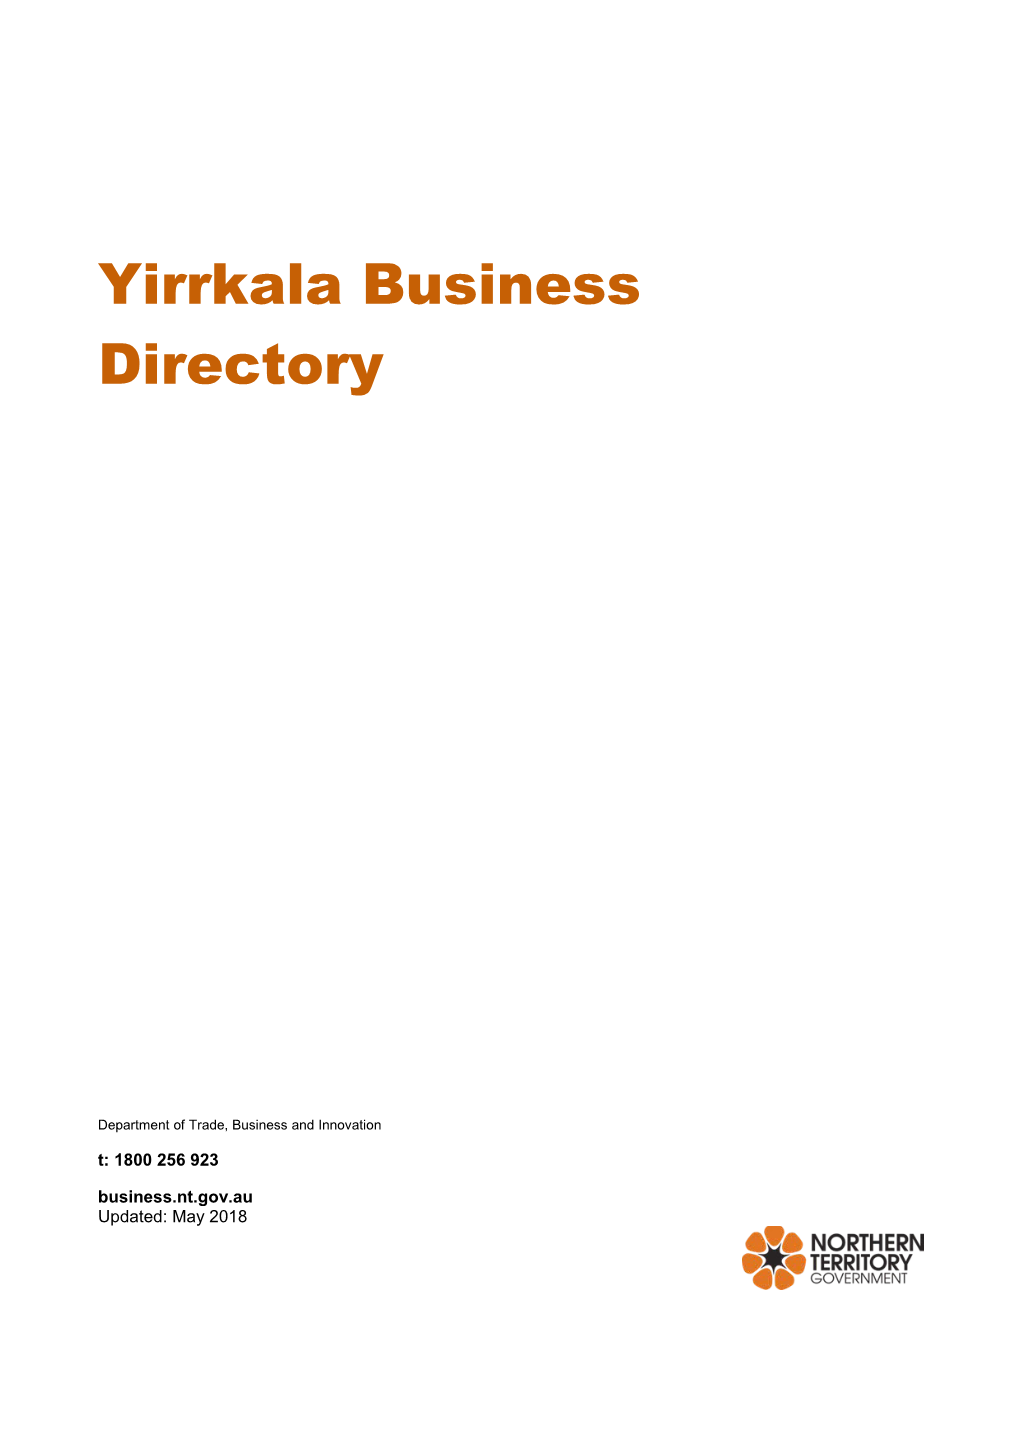 Yirrkala Business Directory